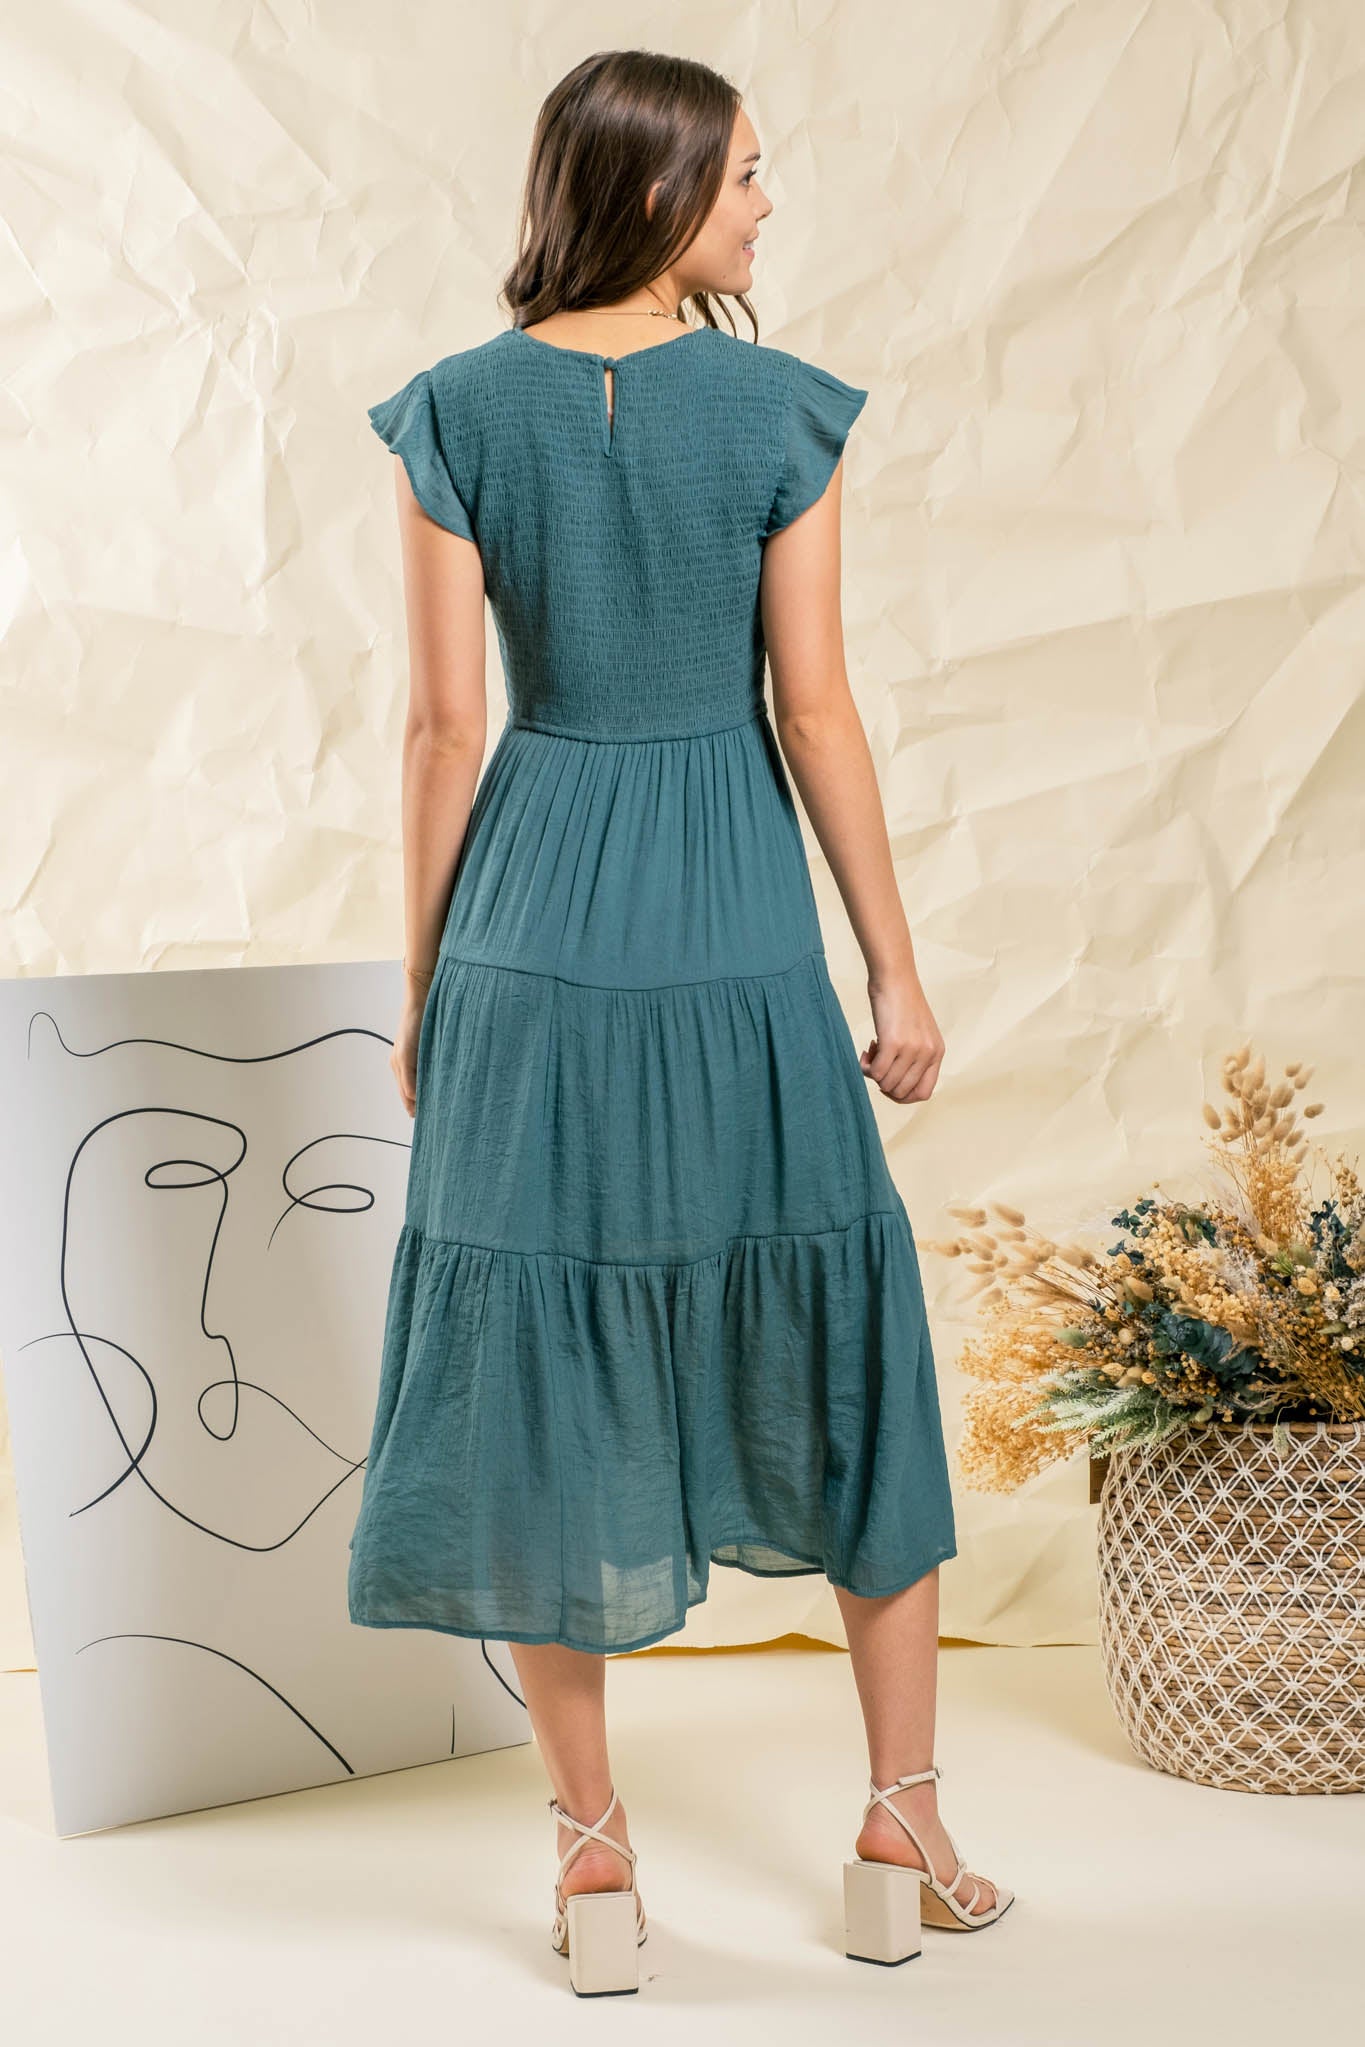 Smocked Tiered Midi Dress - Teal - Regular and Plus